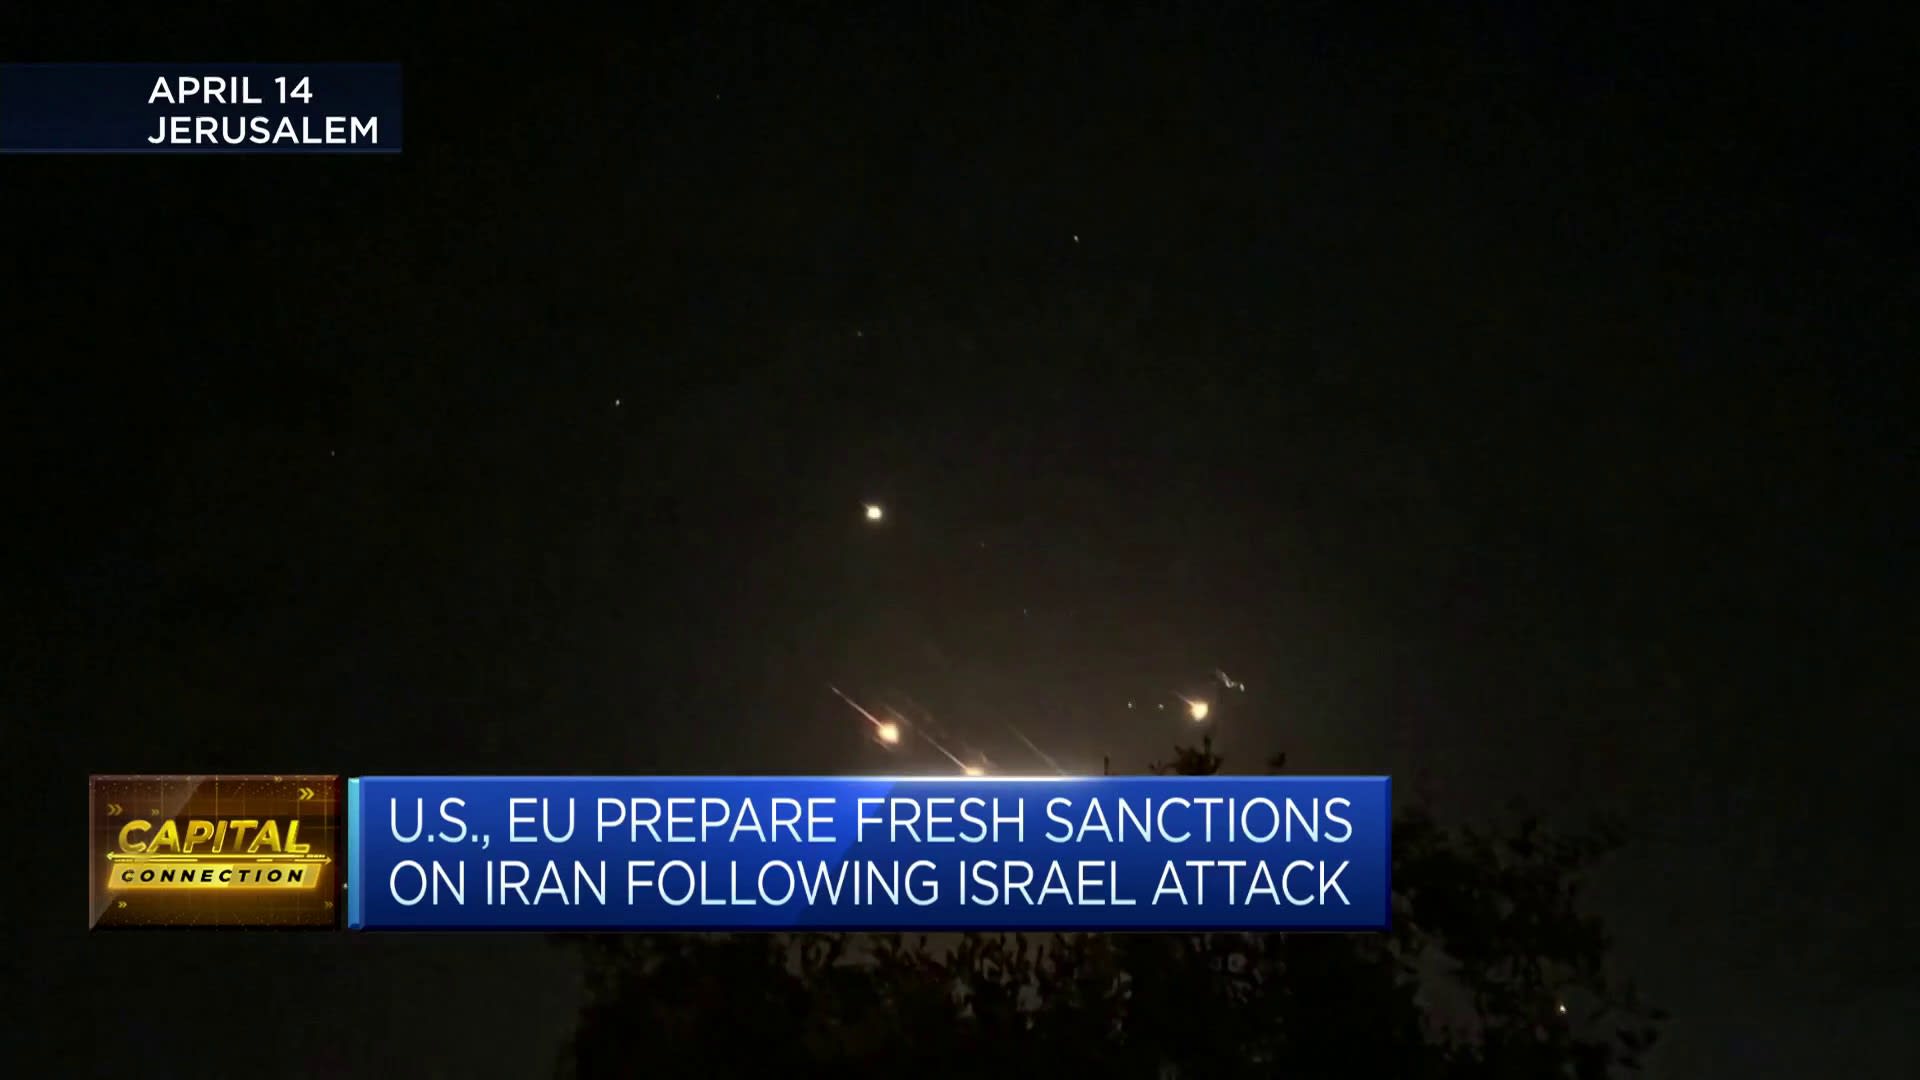 U.S. and EU are preparing sanctions on Iran